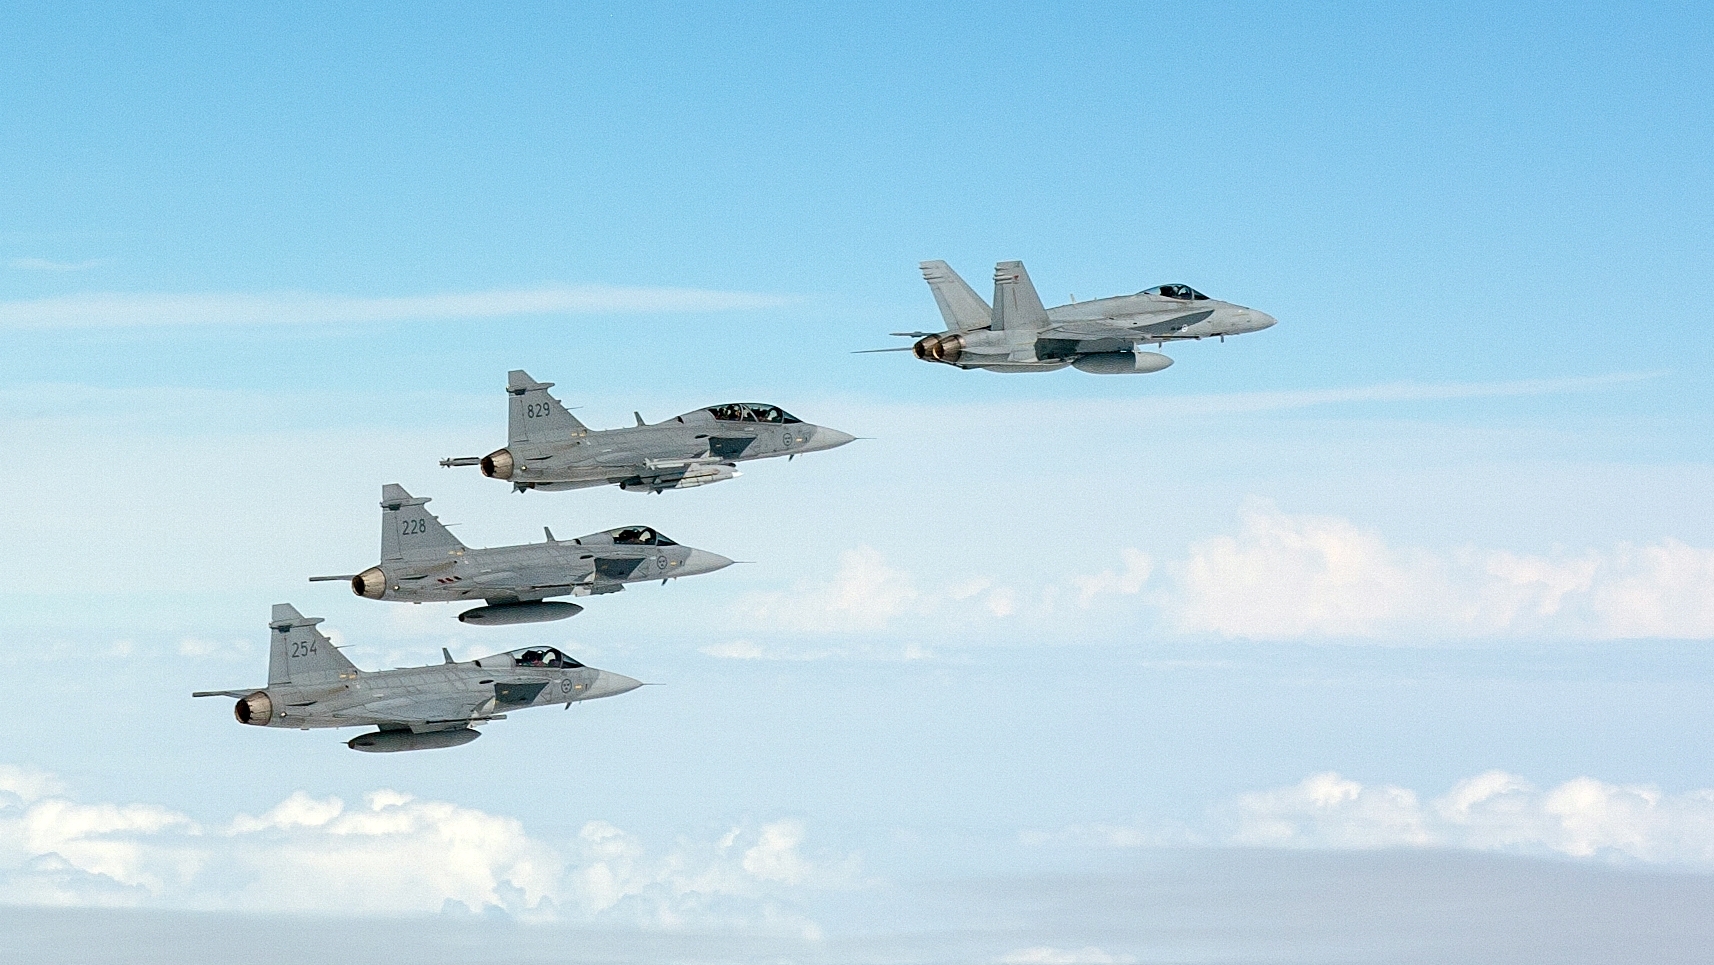 F/A-18 Hornet and three Swedish JAS 39 Gripens